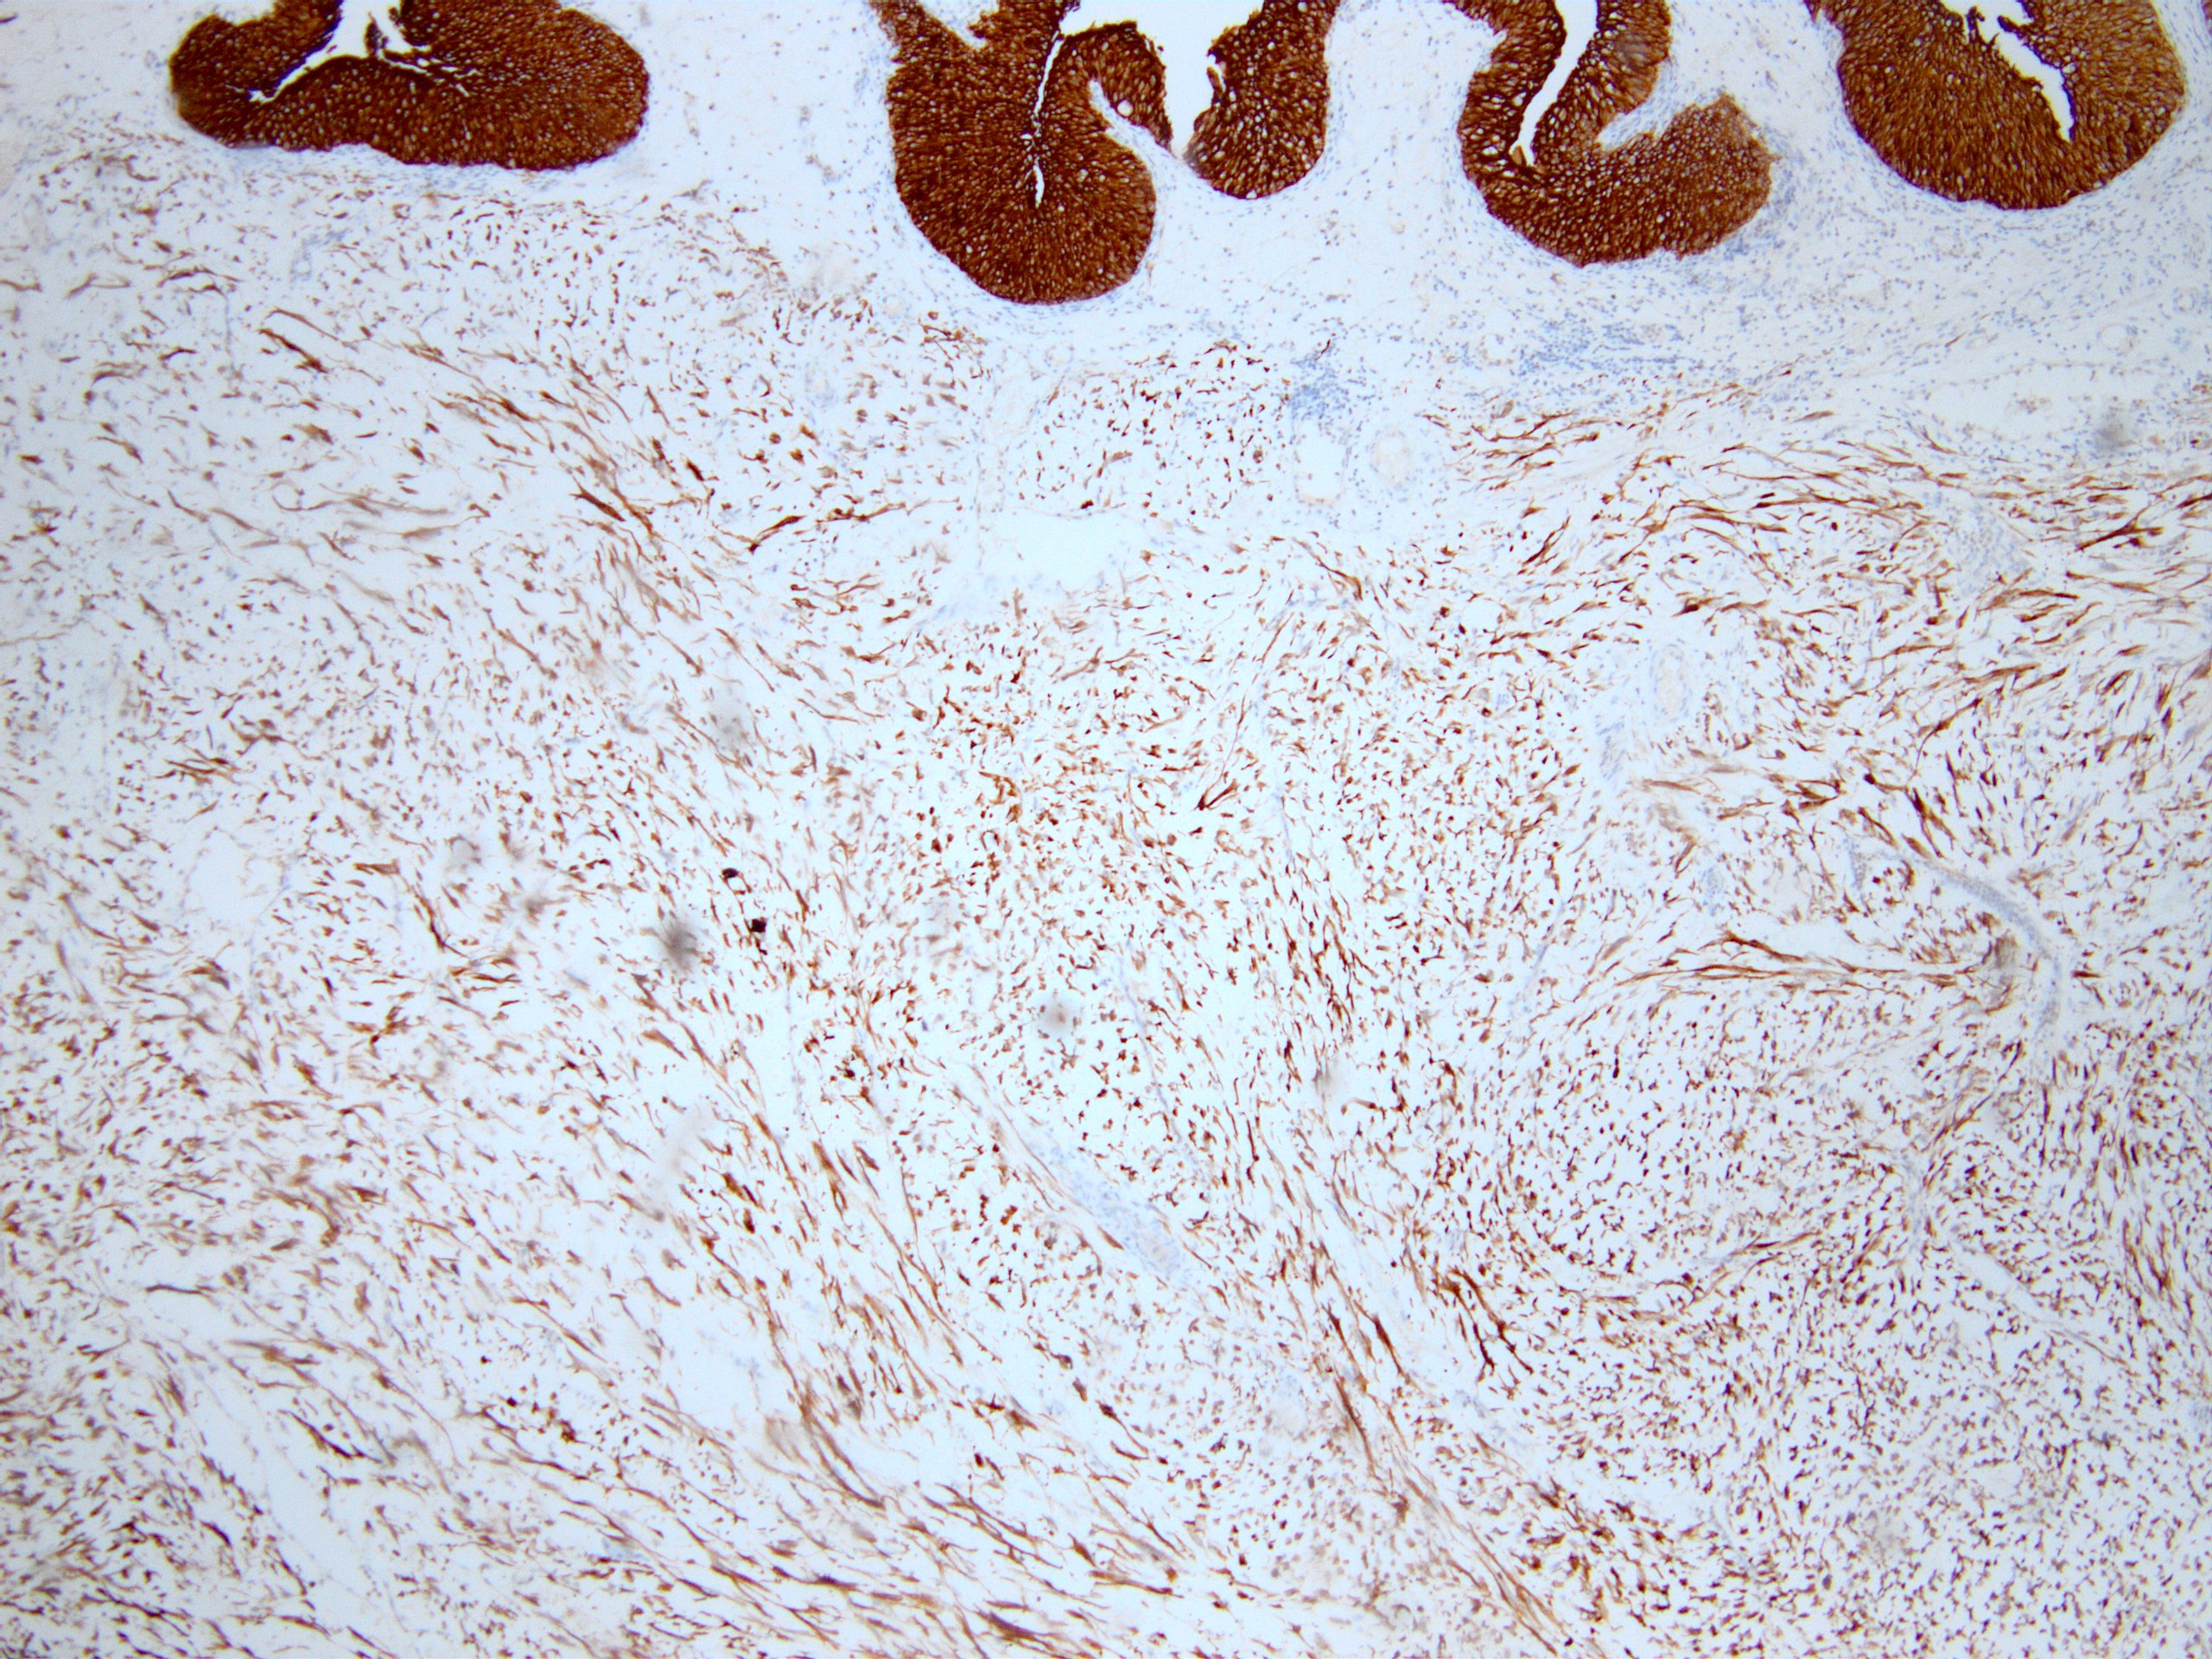 Inflammatory myofibroblastic tumor of the bladder